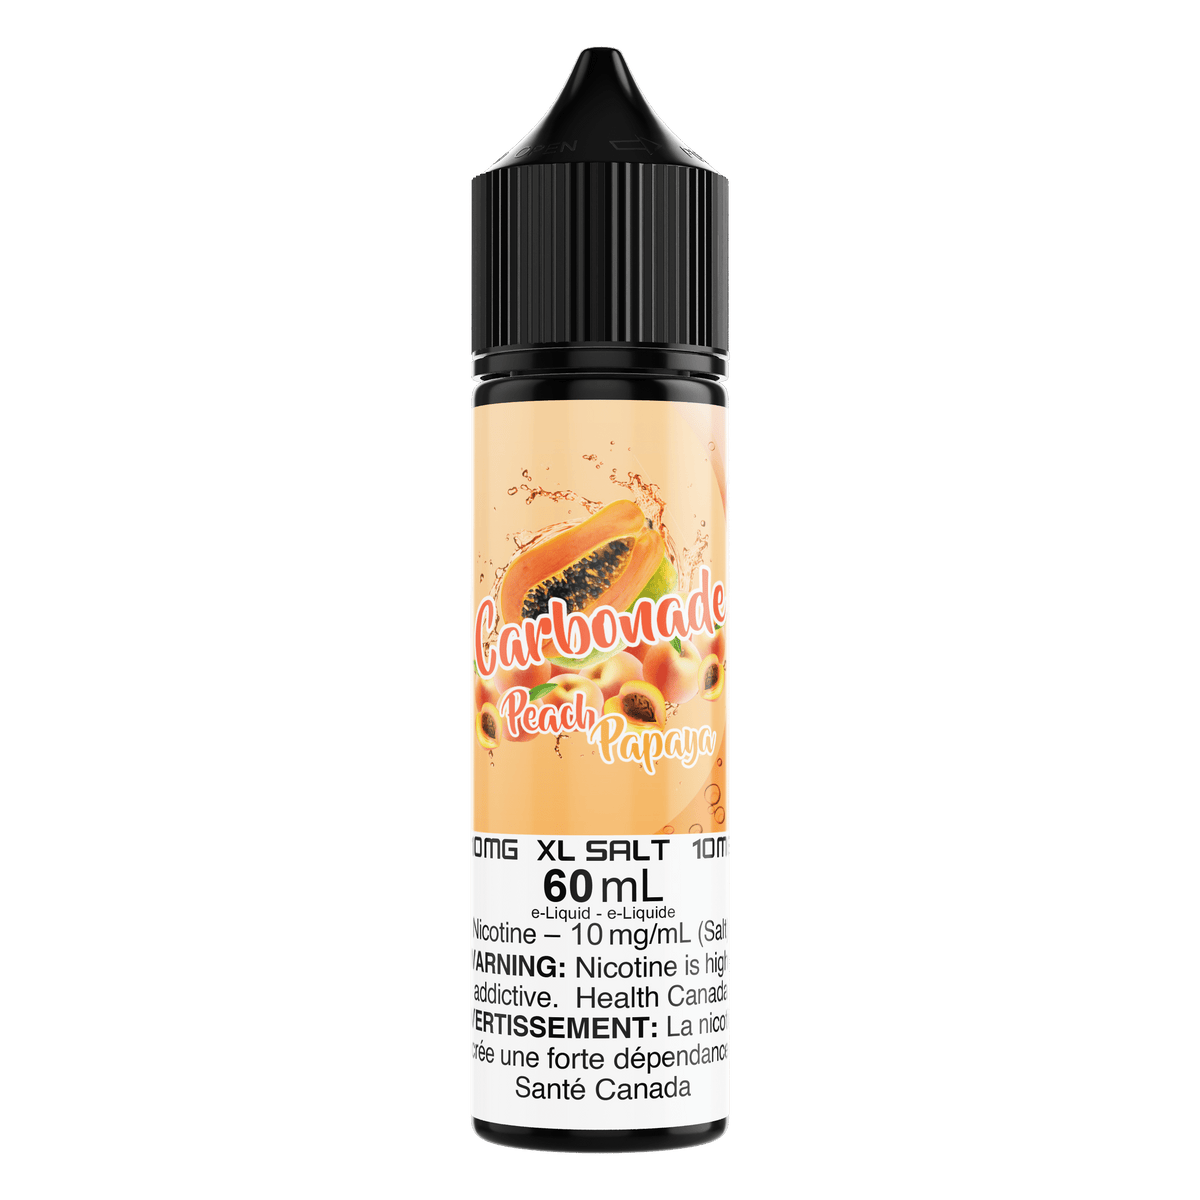 Carbonade XL Salt - Peach Papaya available on Canada online vape shop